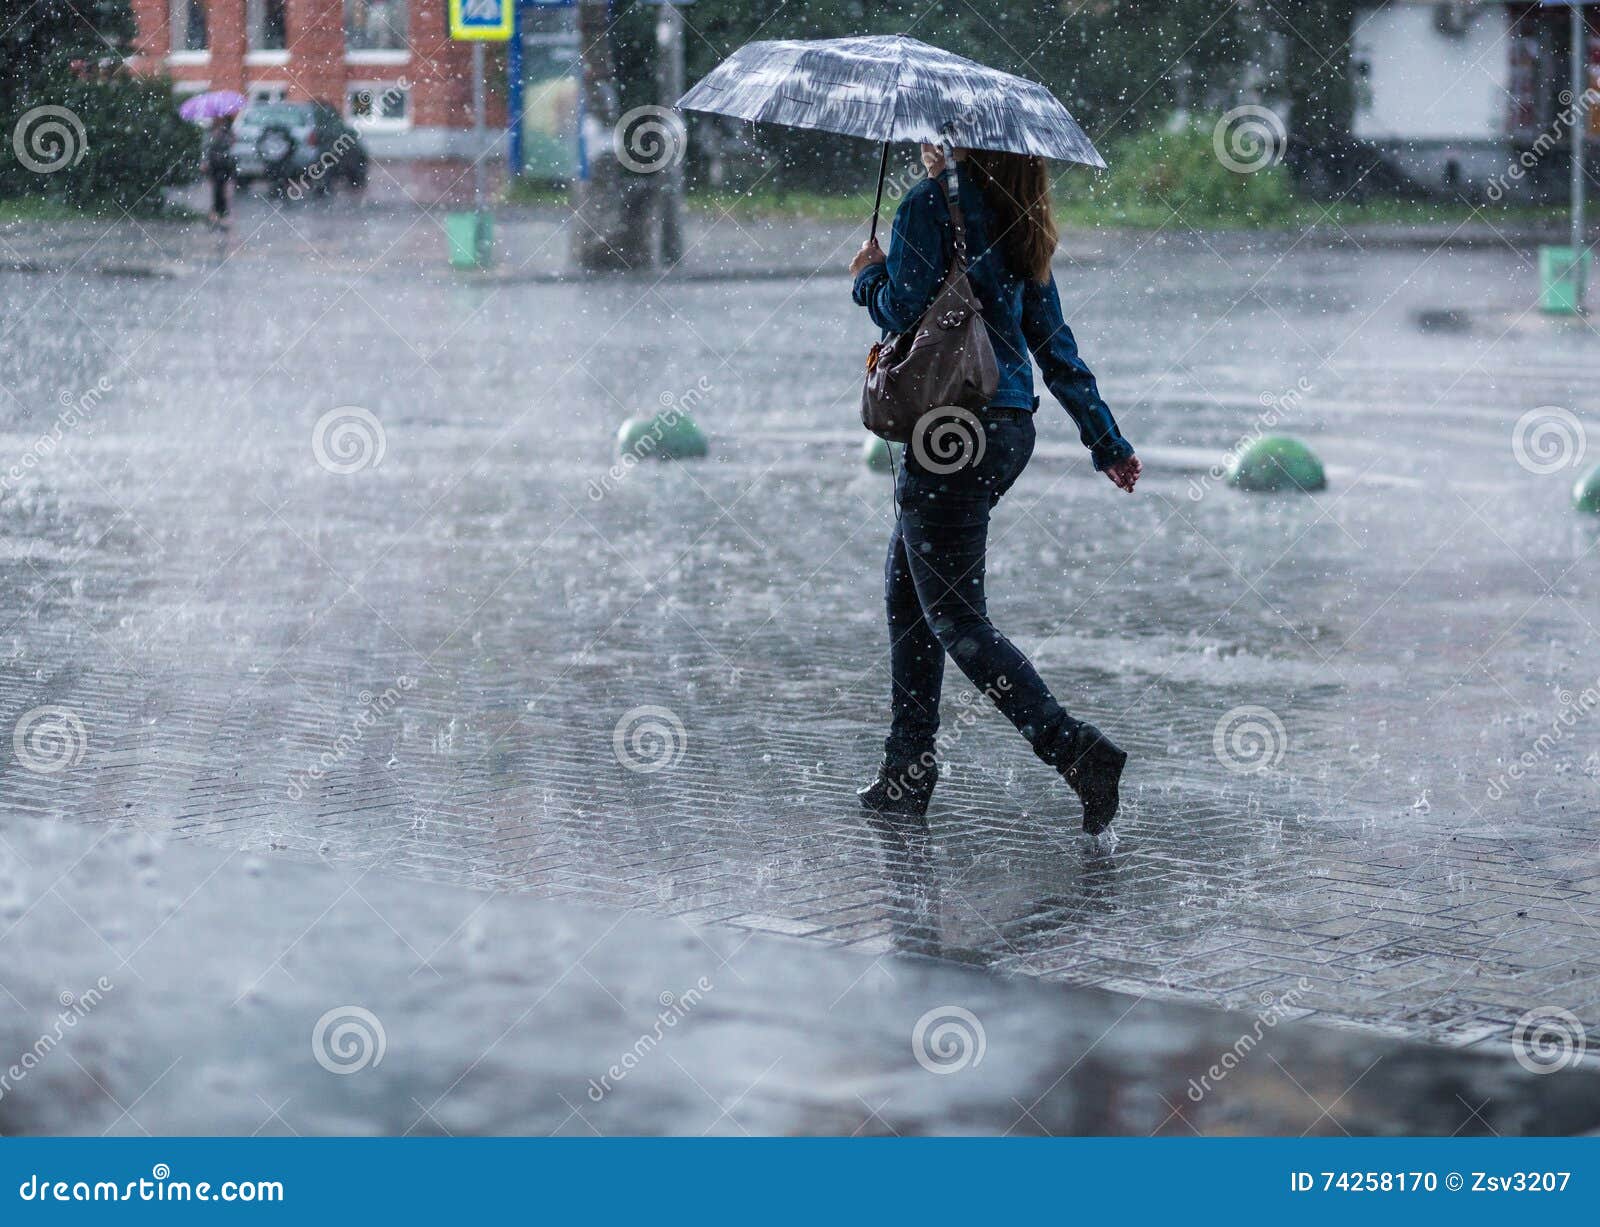 heavy rain umbrella